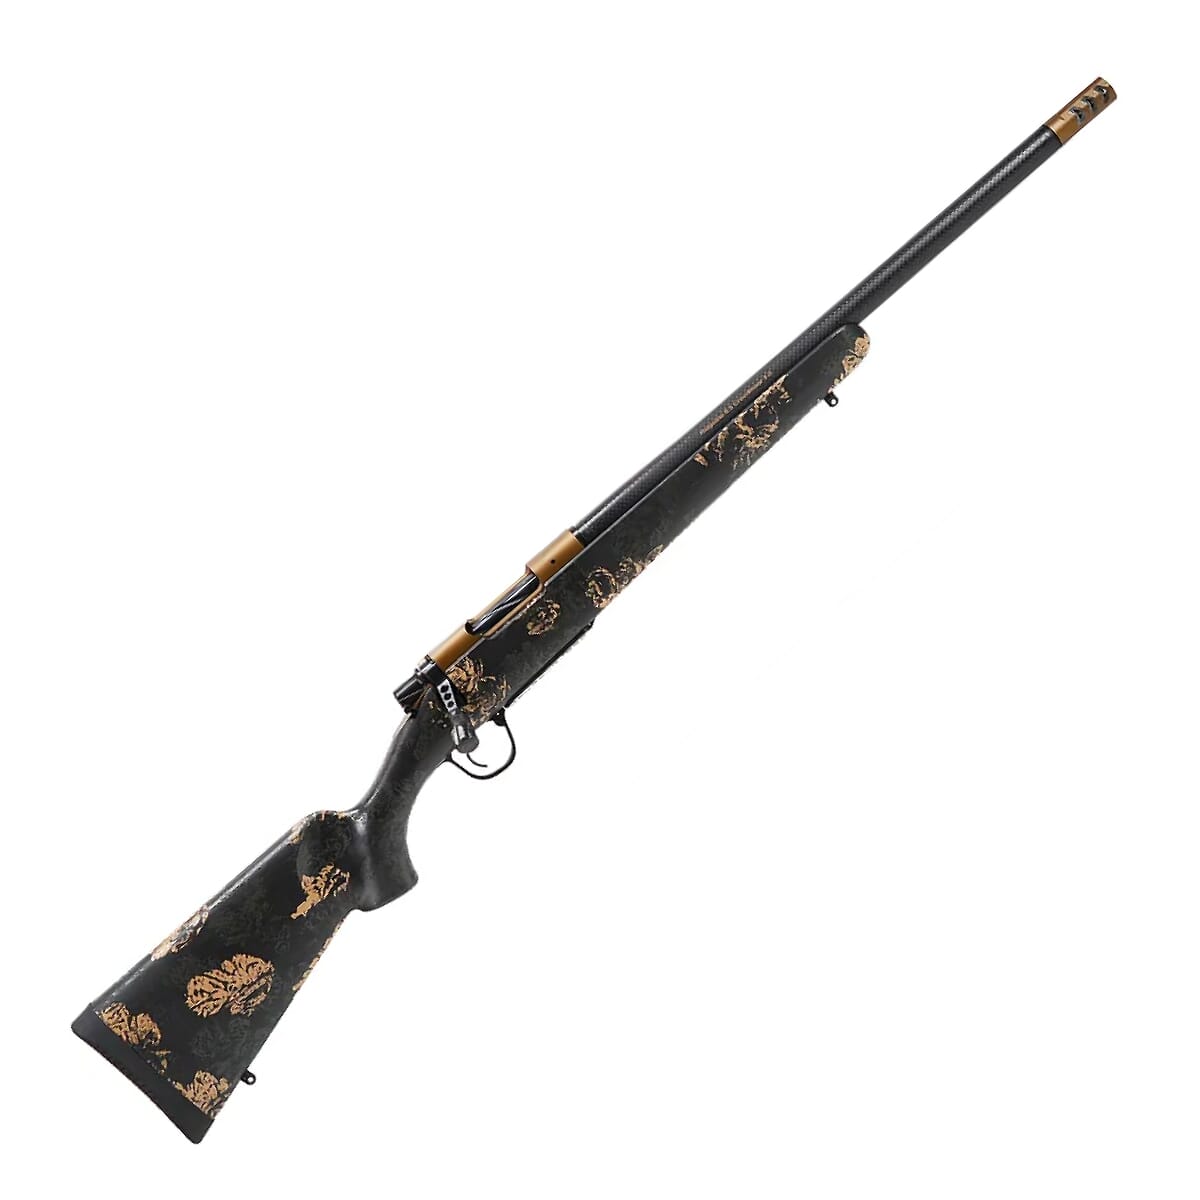 Christensen Arms Ridgeline FFT Burnt Bronze .300 Win Mag 22" 1:10" Bbl Green w/Black/Tan Accents Rifle 801-06200-00